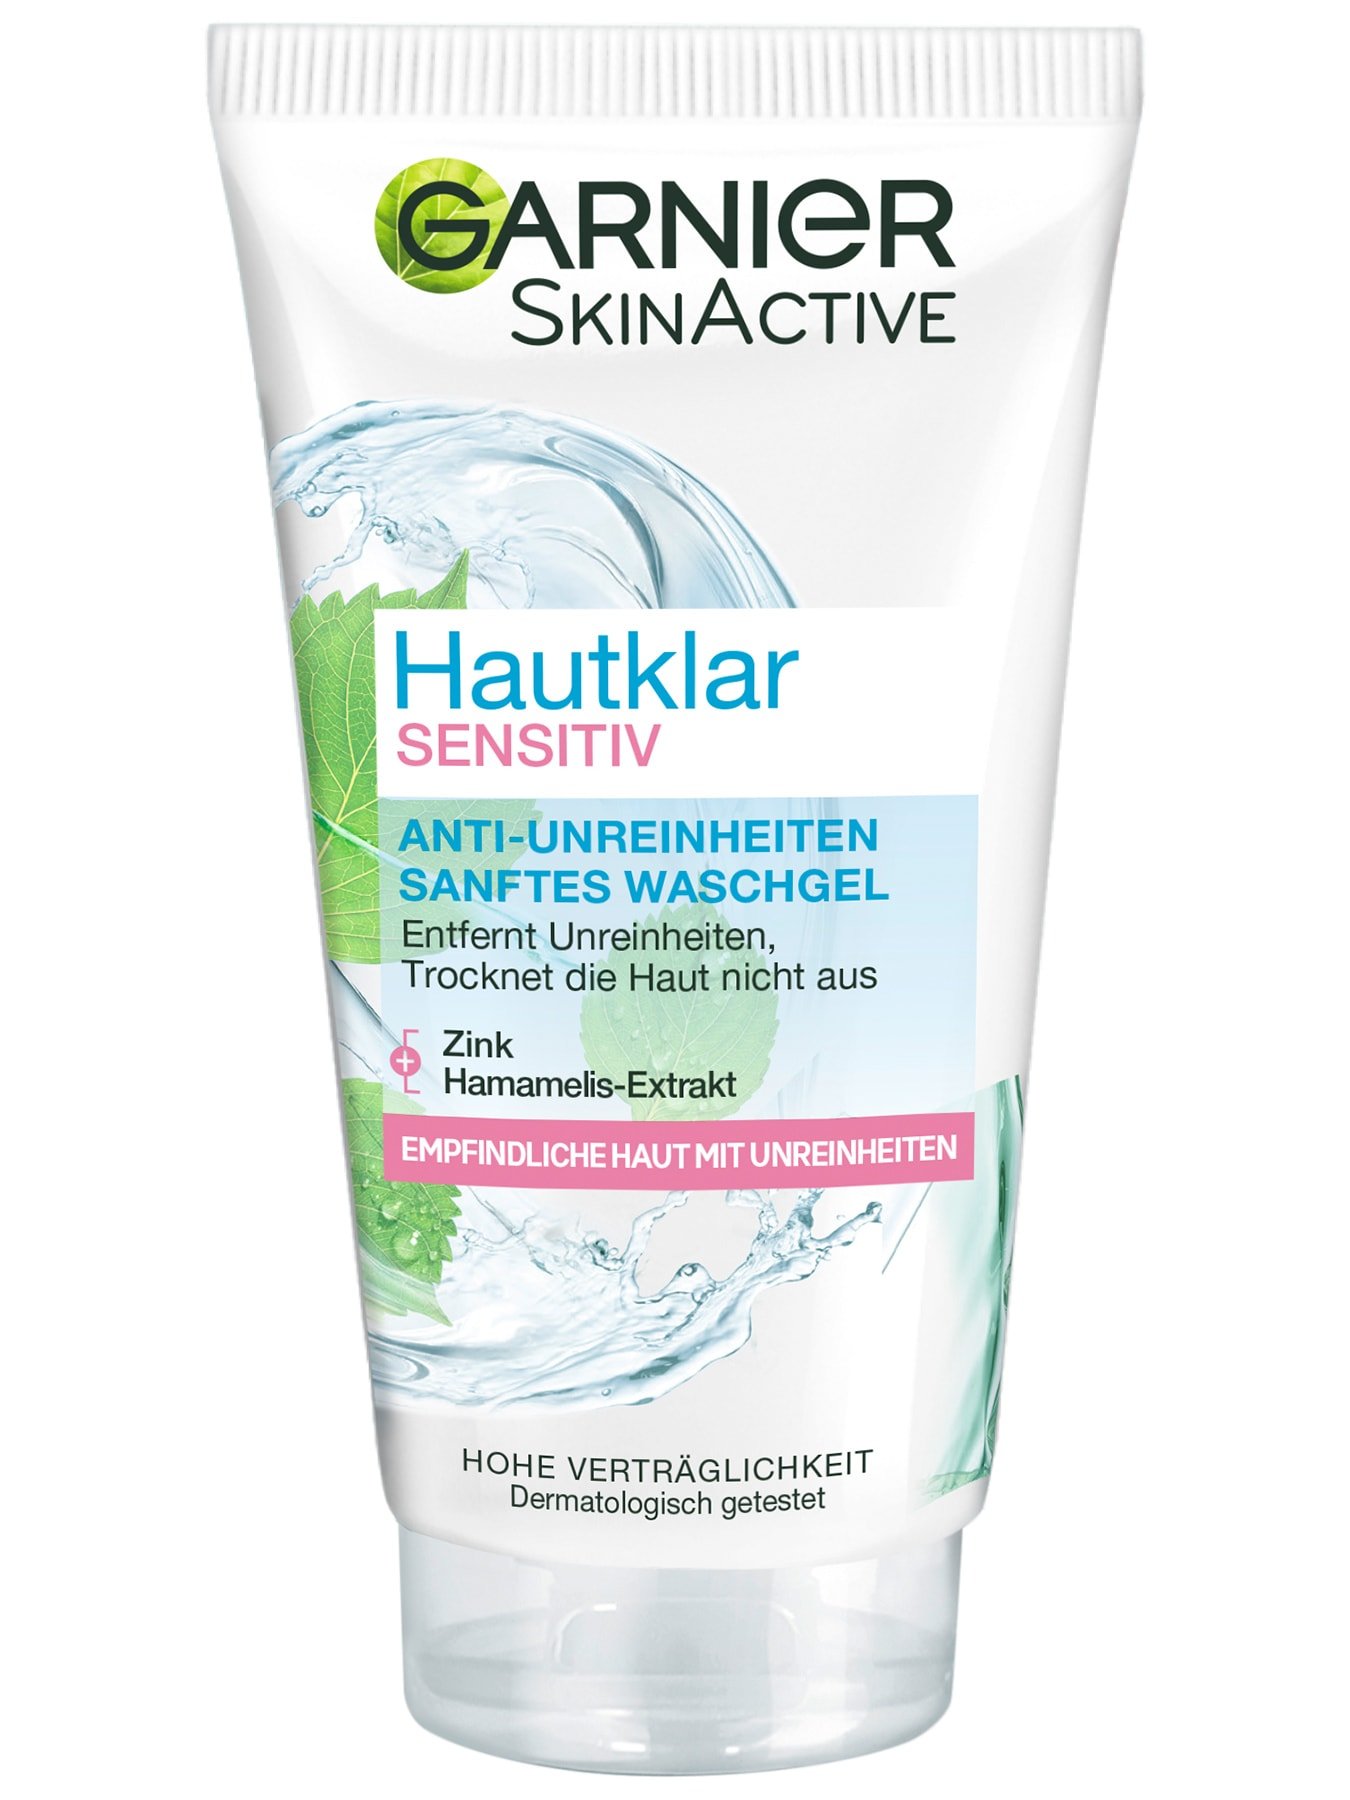 Garnier Hautklar Sensitiv Waschgel Produktverpackung vorne